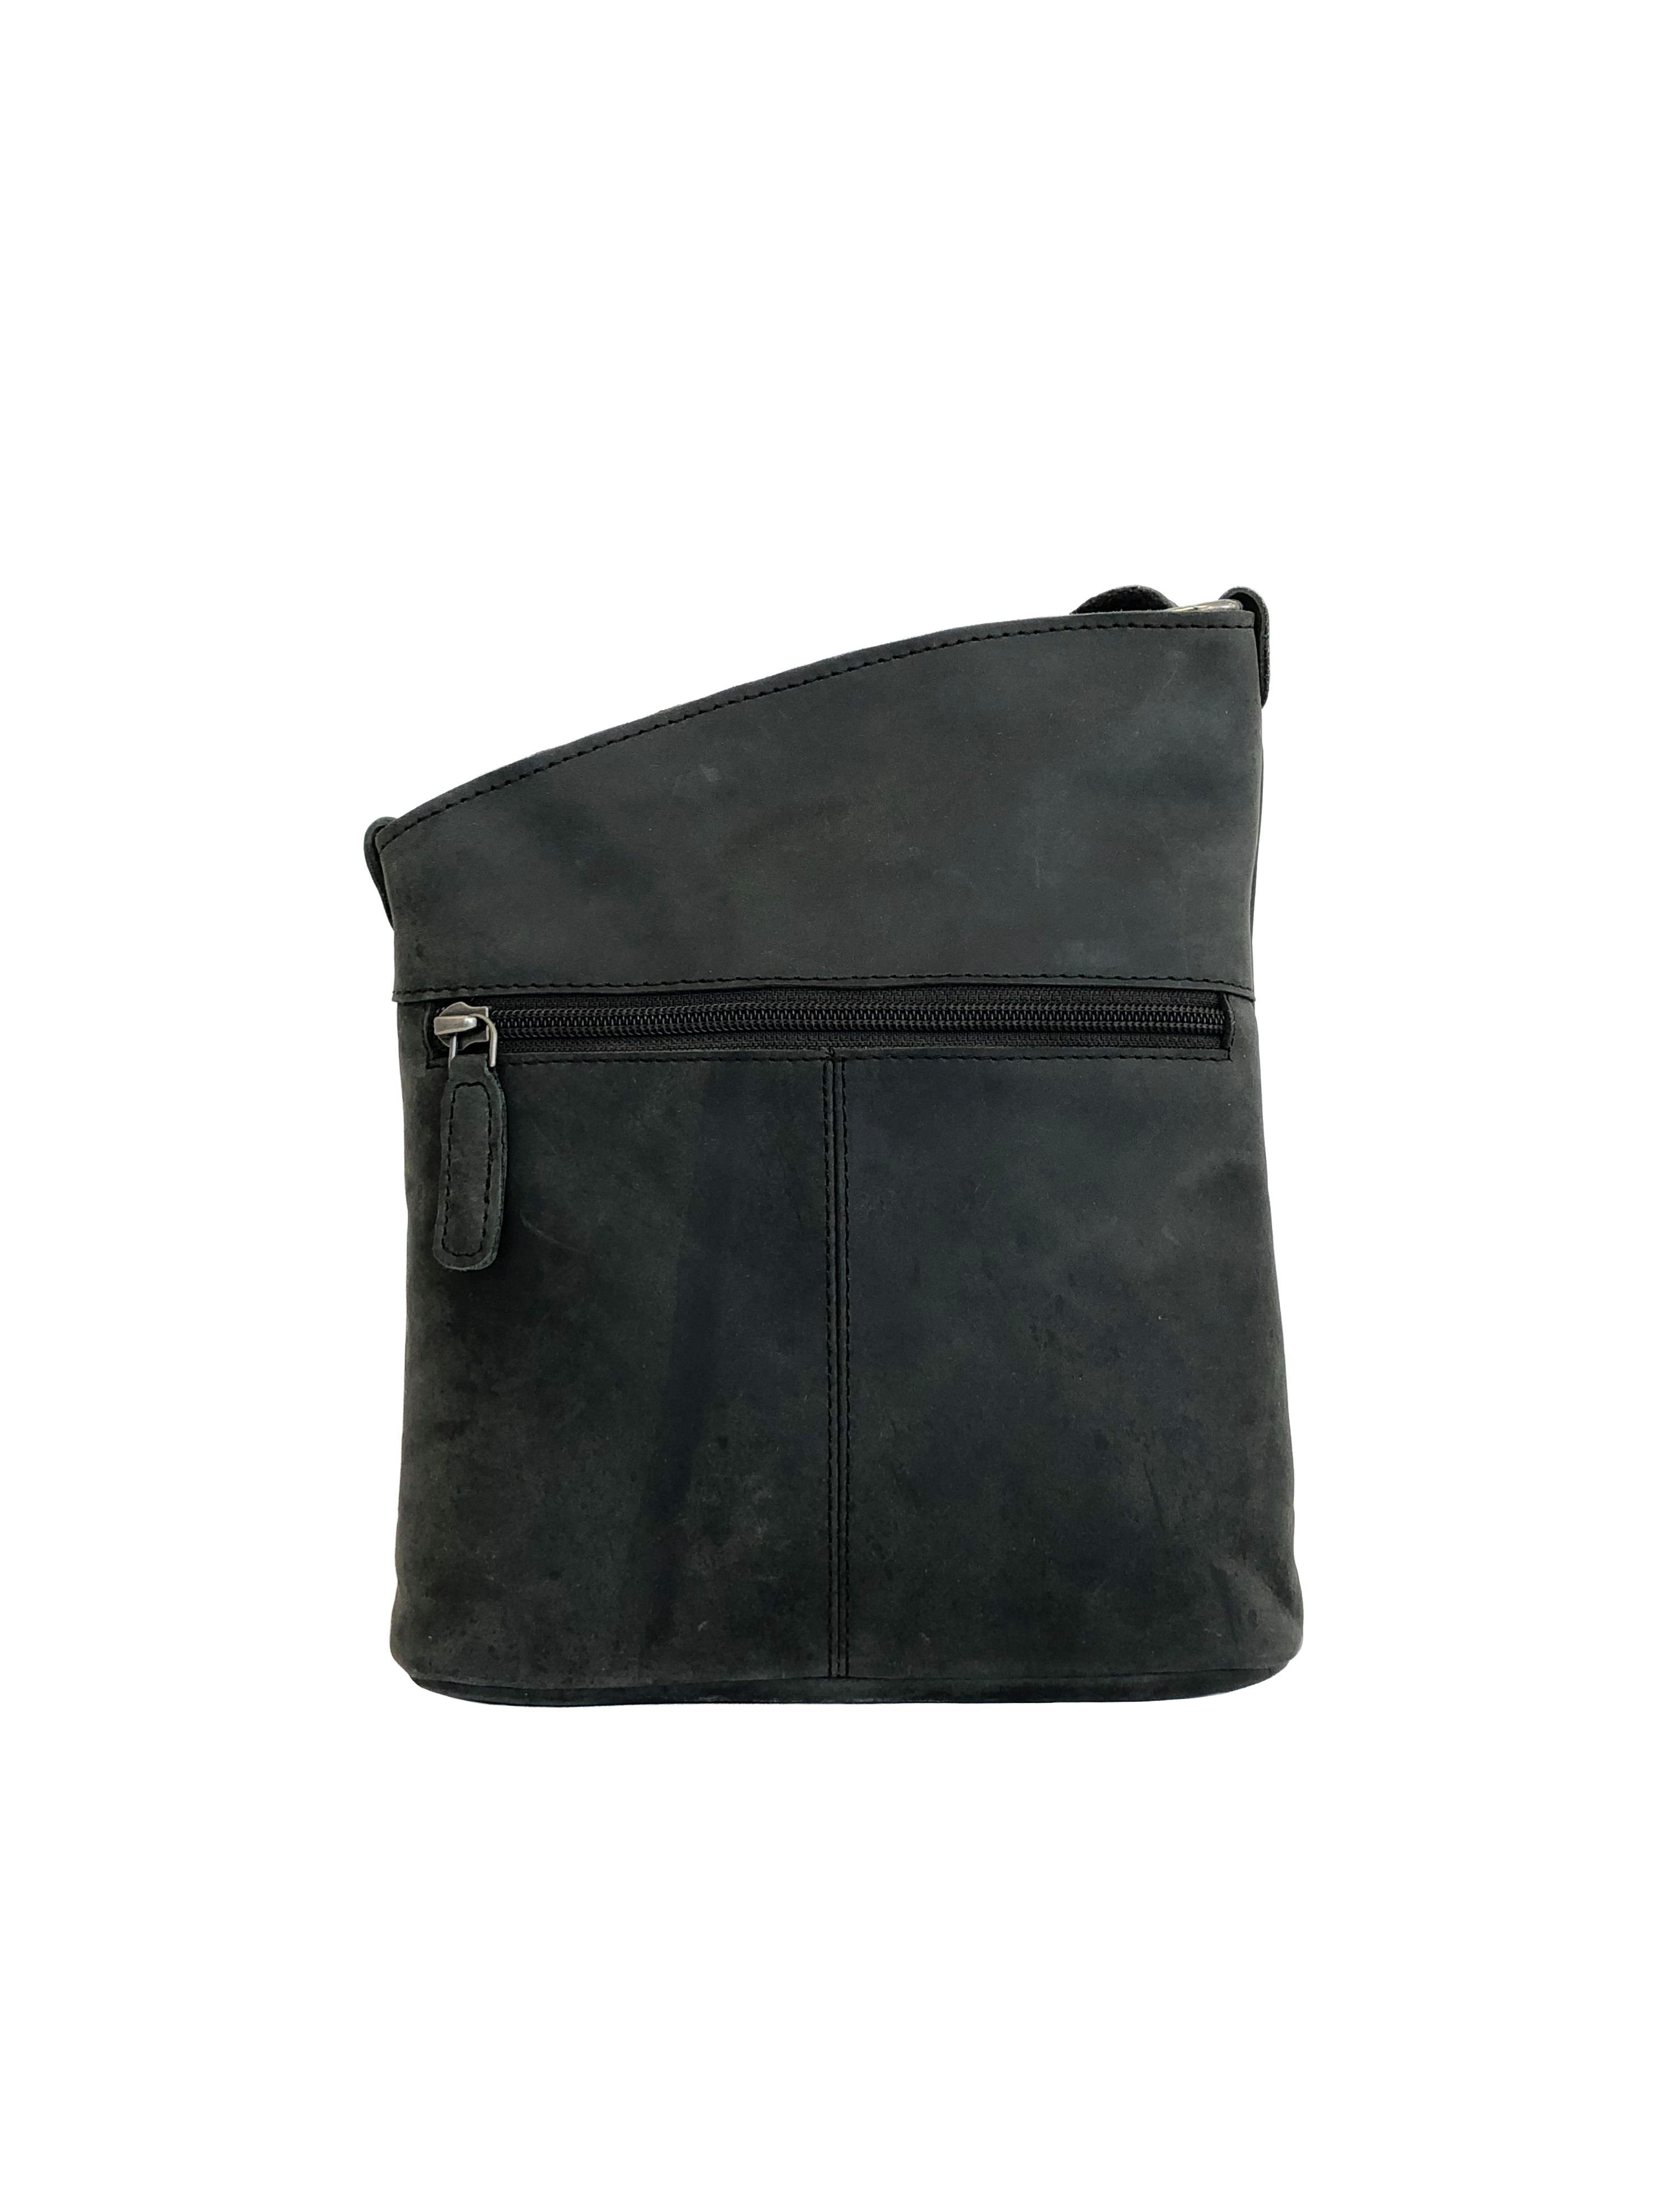 Vintage Ledertasche Handtasche Umhängetasche Bag PAULA, Black Bag Crossbody Bayern